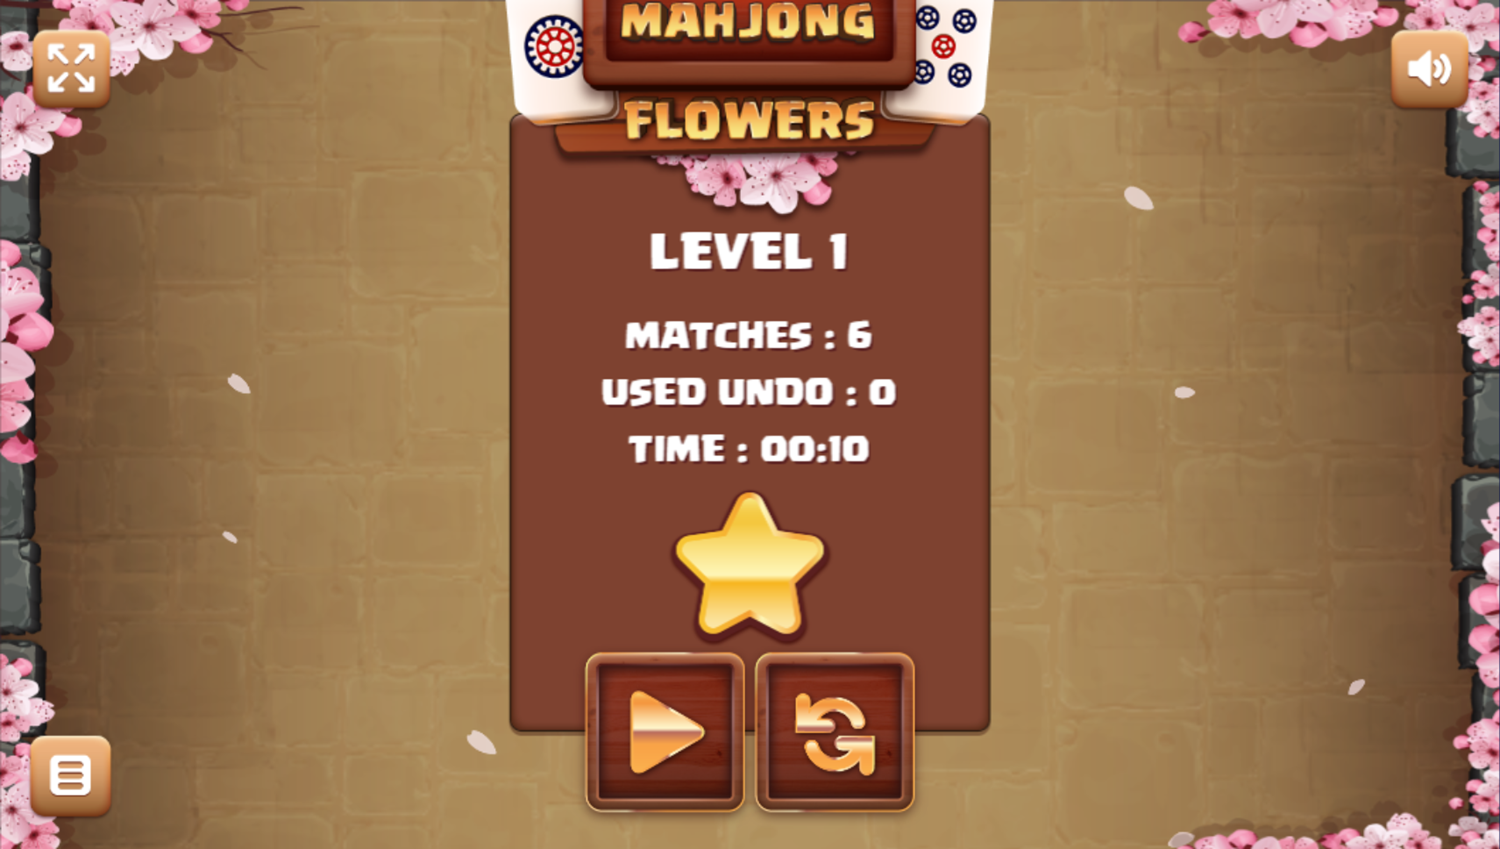 Mahjong Flowers Game Level Complete Screenshot.